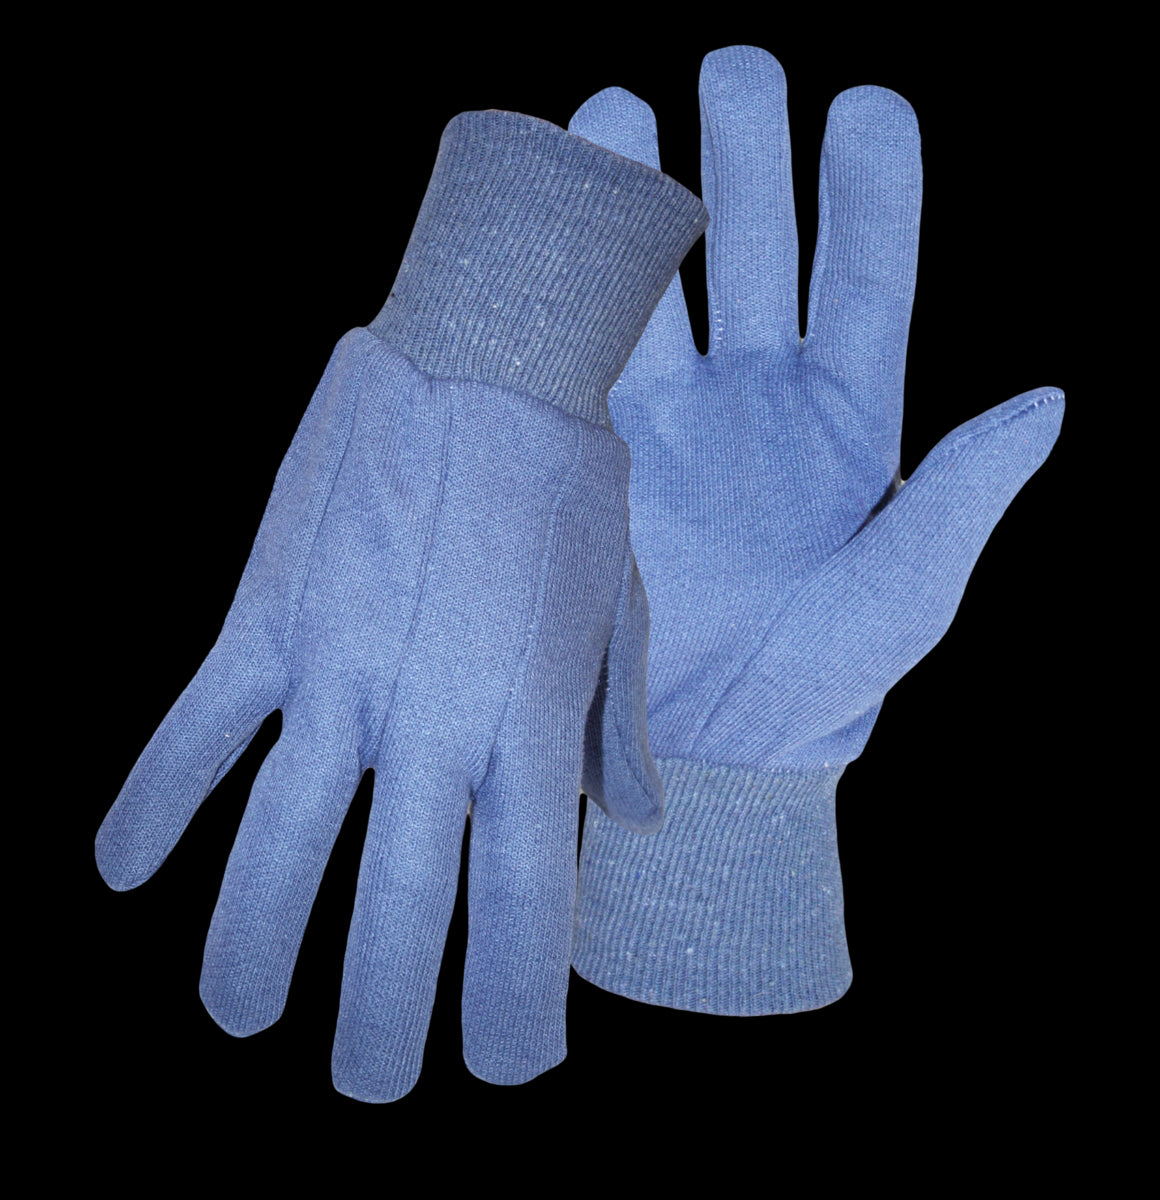 Boss® Blue Jersey Glove, Size L. 100% Cotton. Item # 4029. Sold by the Dozen.